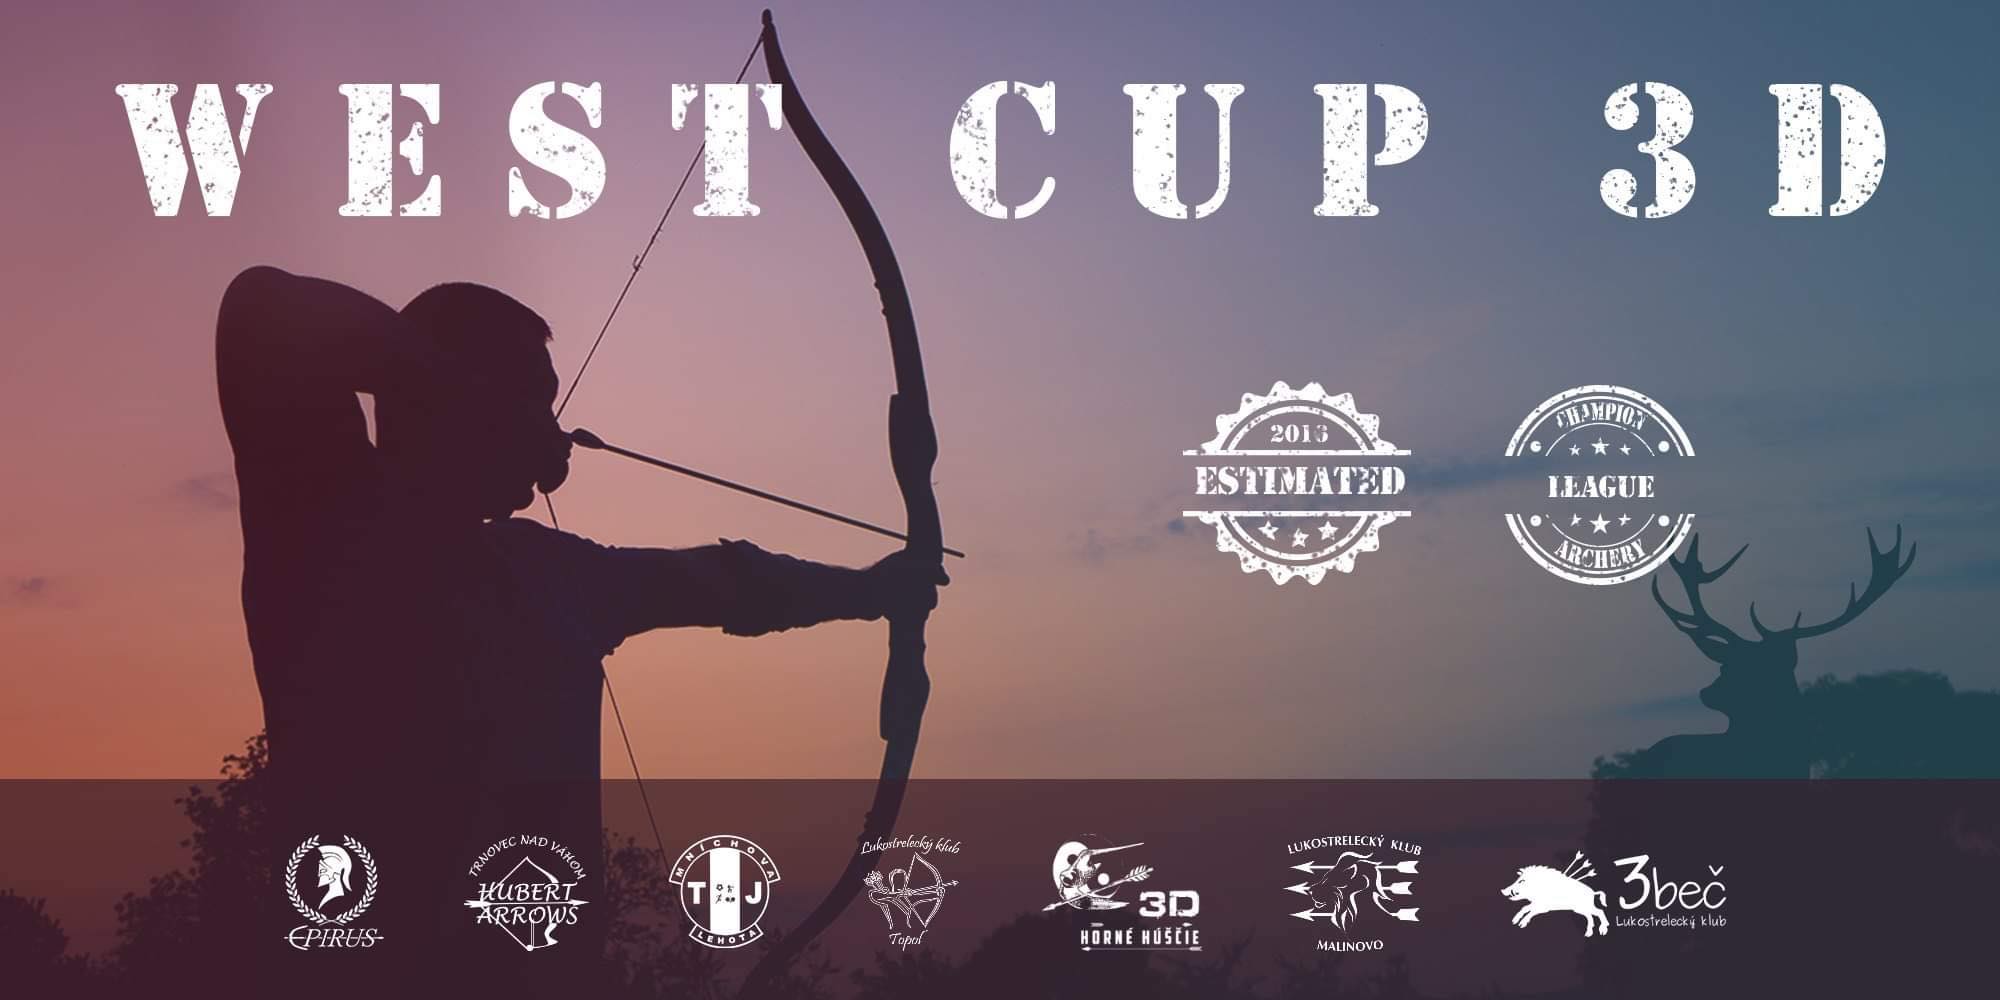 3D West Cup logo.jpg